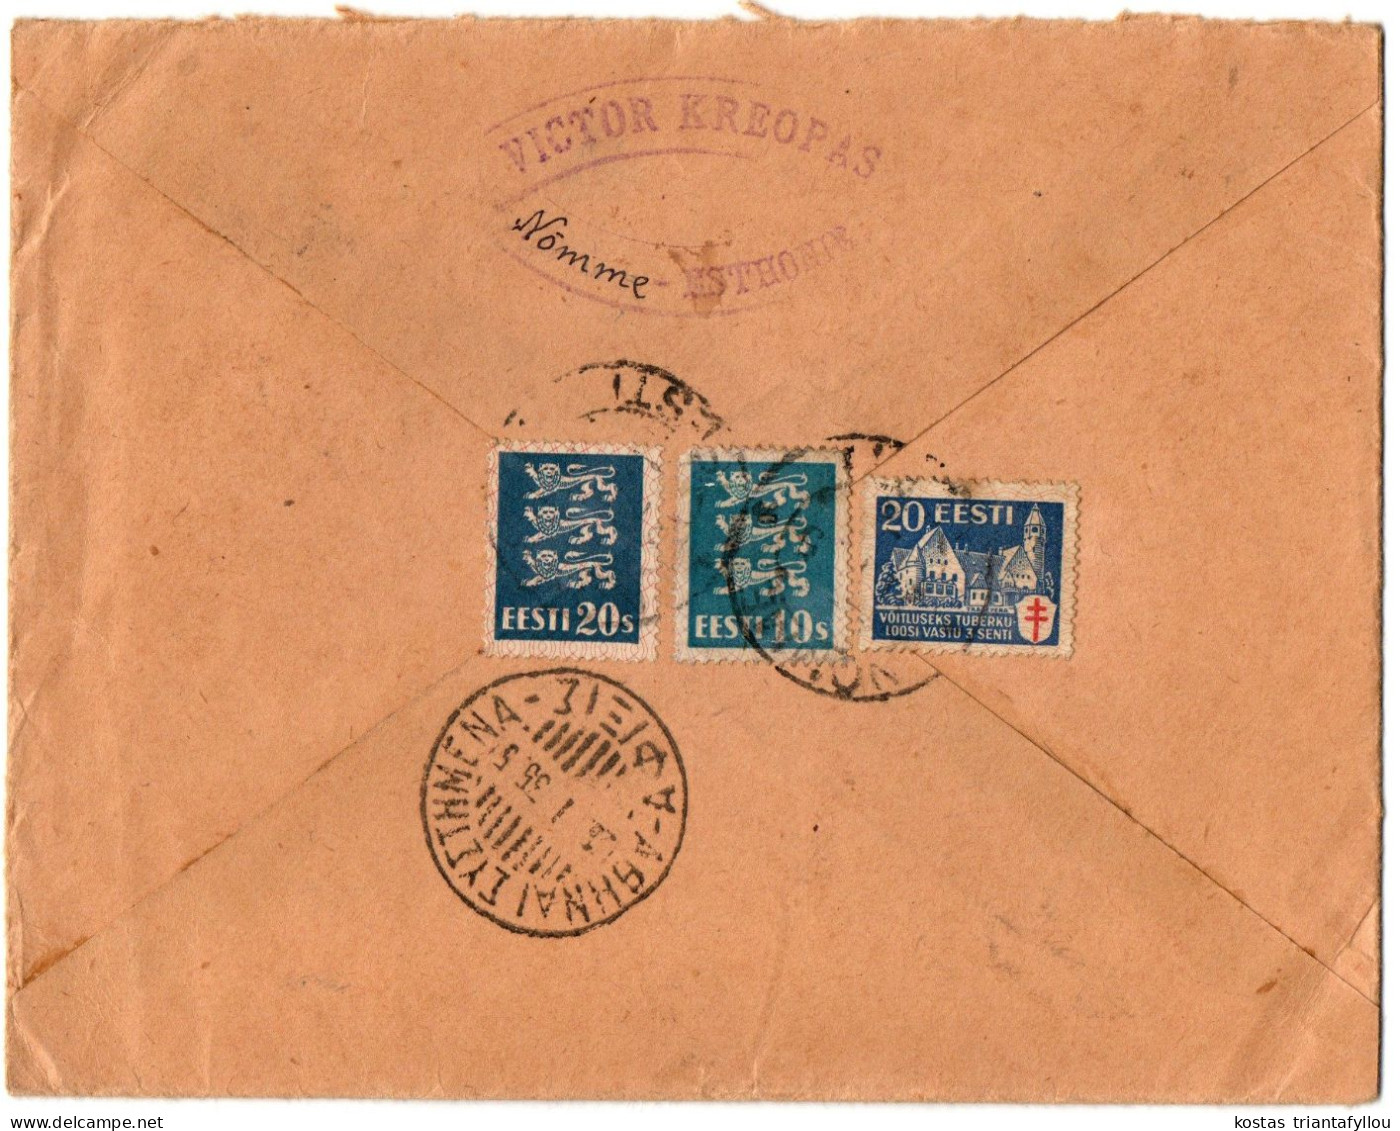 1,44 ESTONIA, 1935, COVER TO GREECE - Estonia